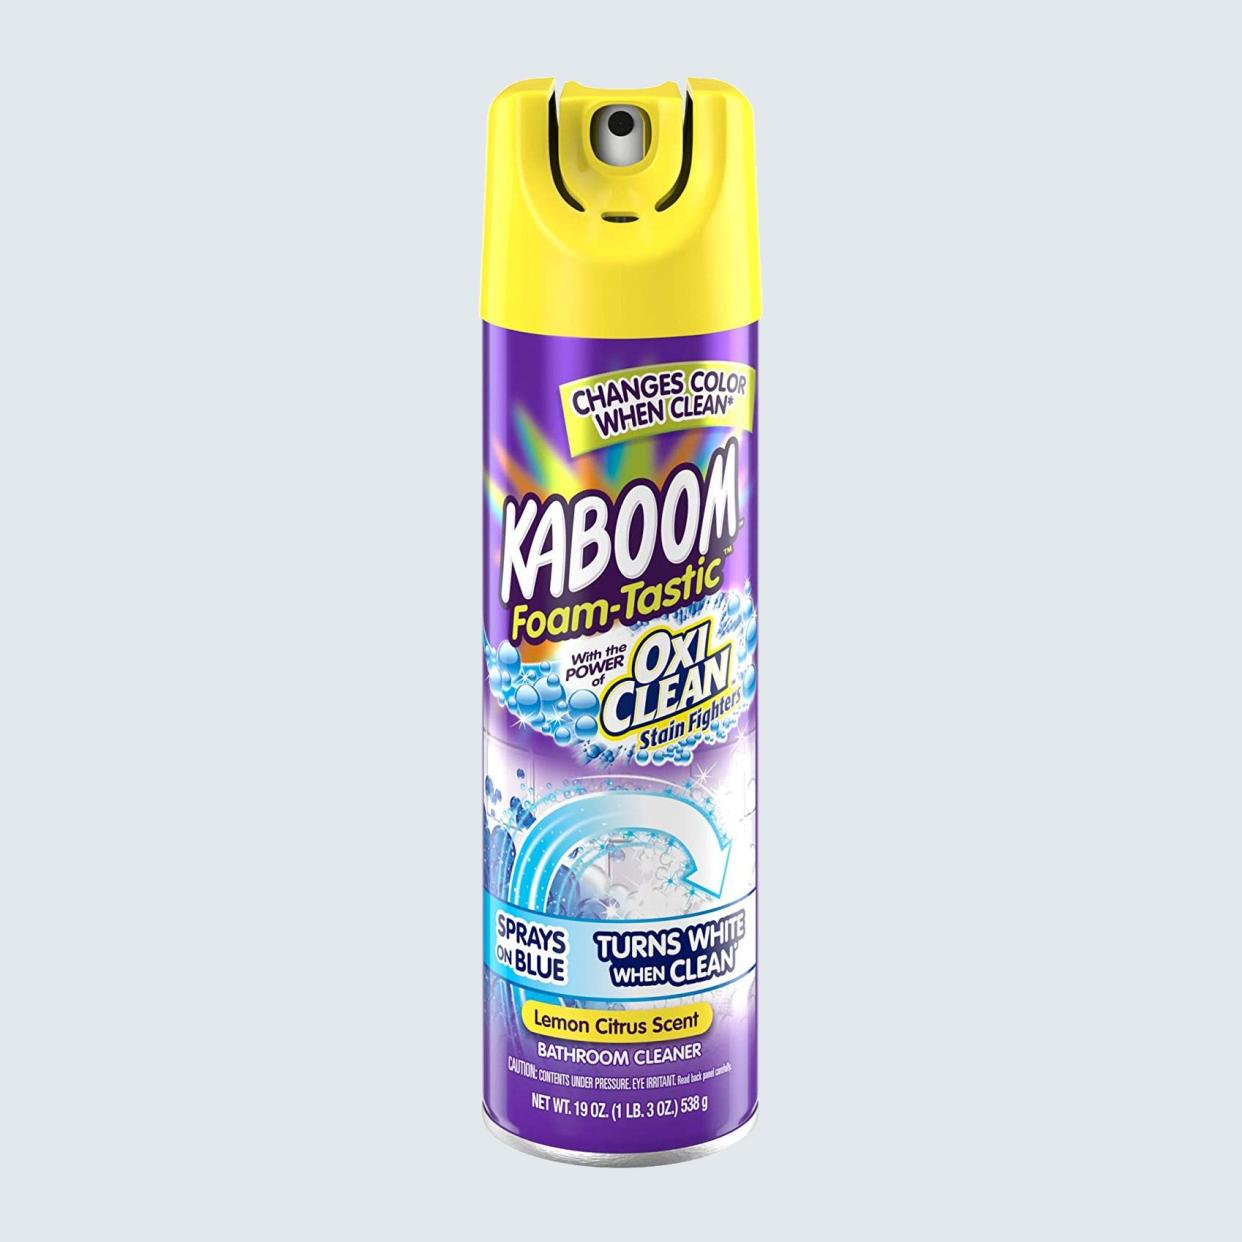 Kaboom Foam-Tastic Bathroom Cleaner with Oxiclean